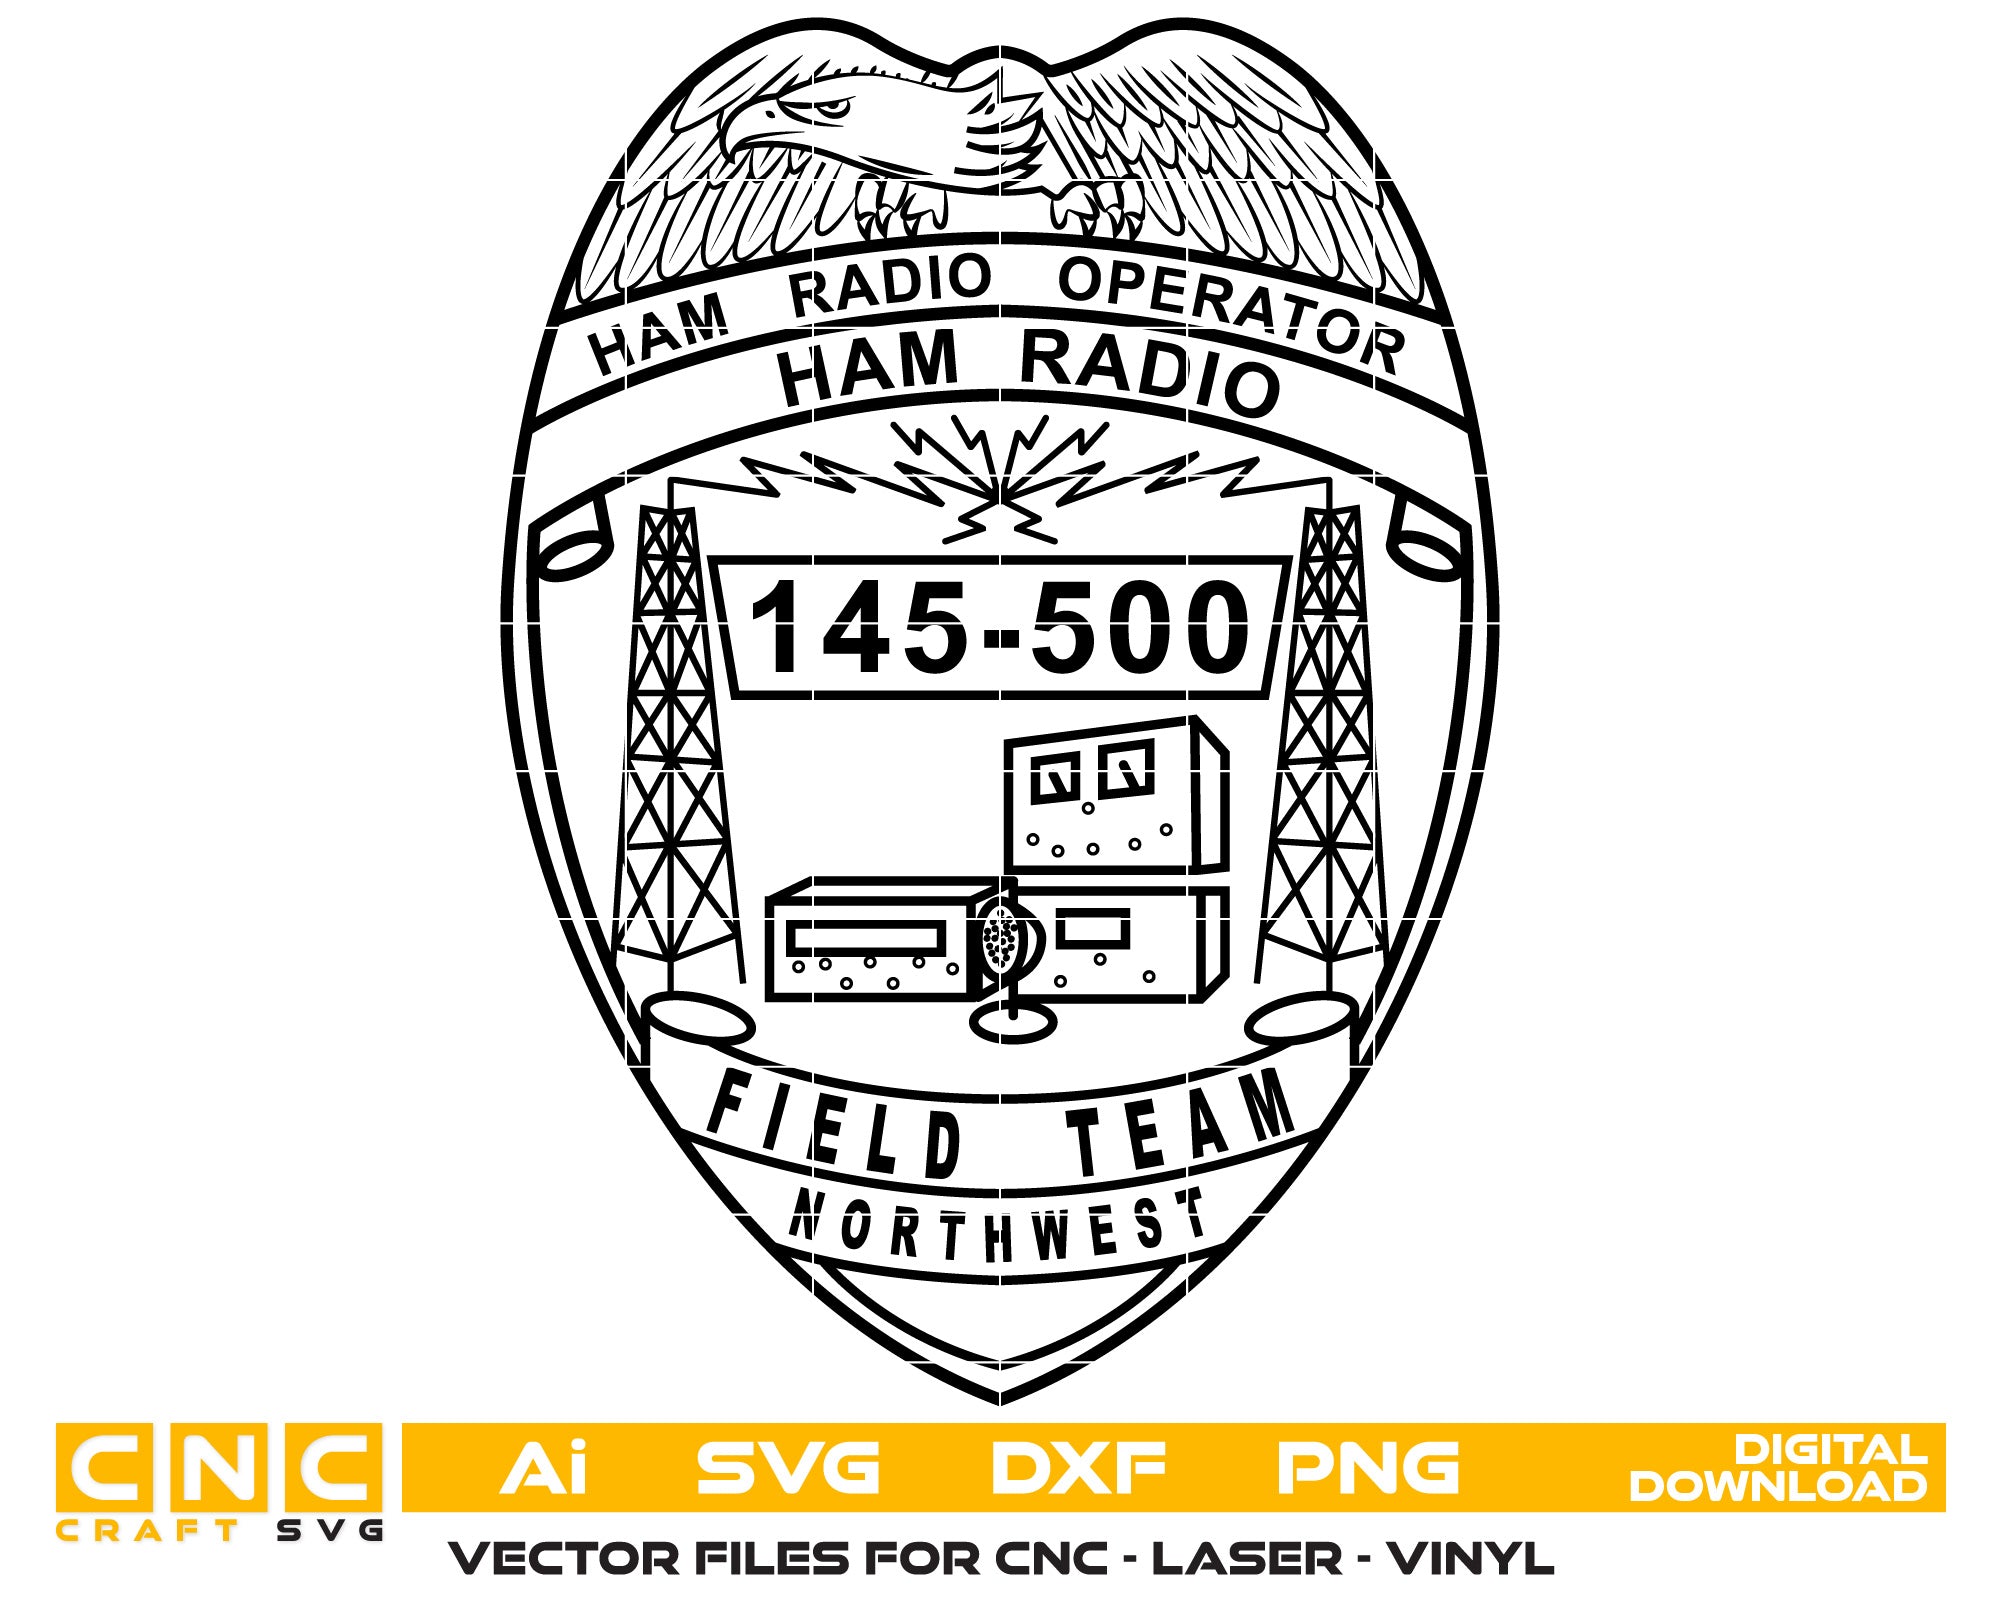 Northwest Ham Radio Operator Badge Vector Art, Ai,SVG, DXF, PNG, Digital Files